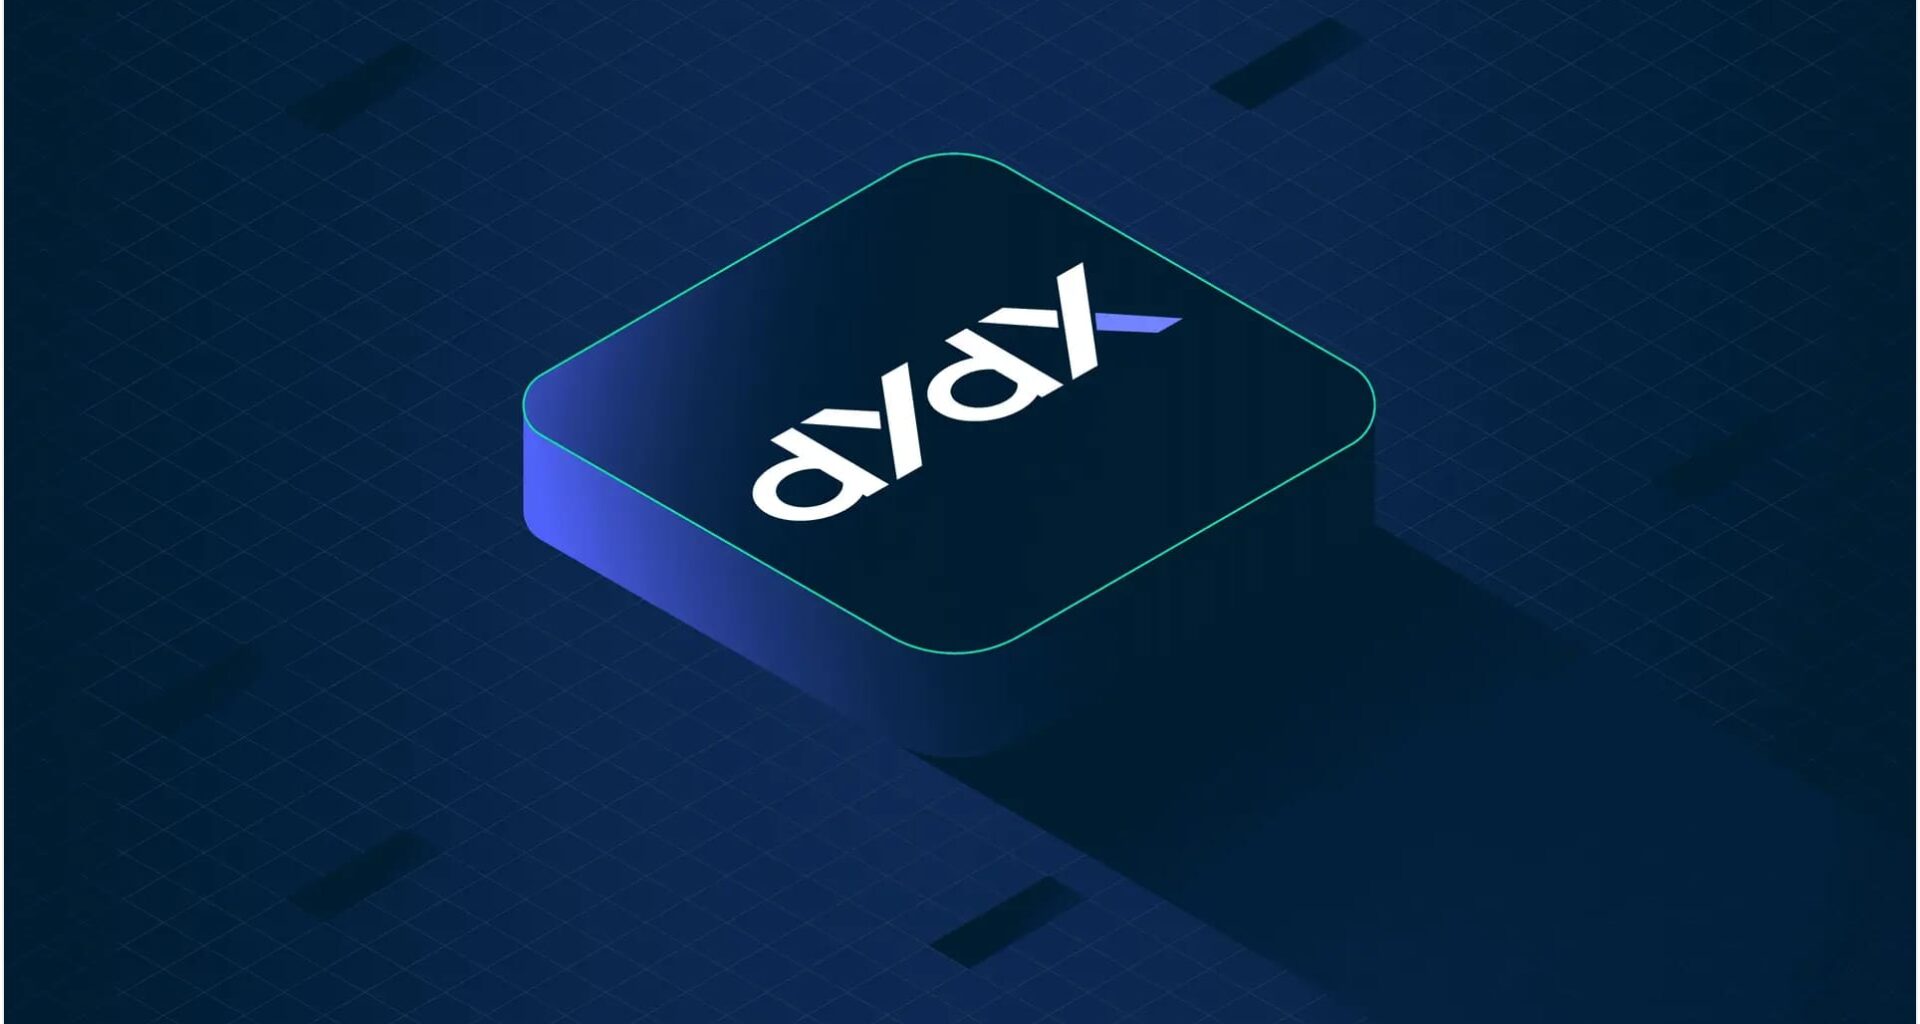 Dydx open source